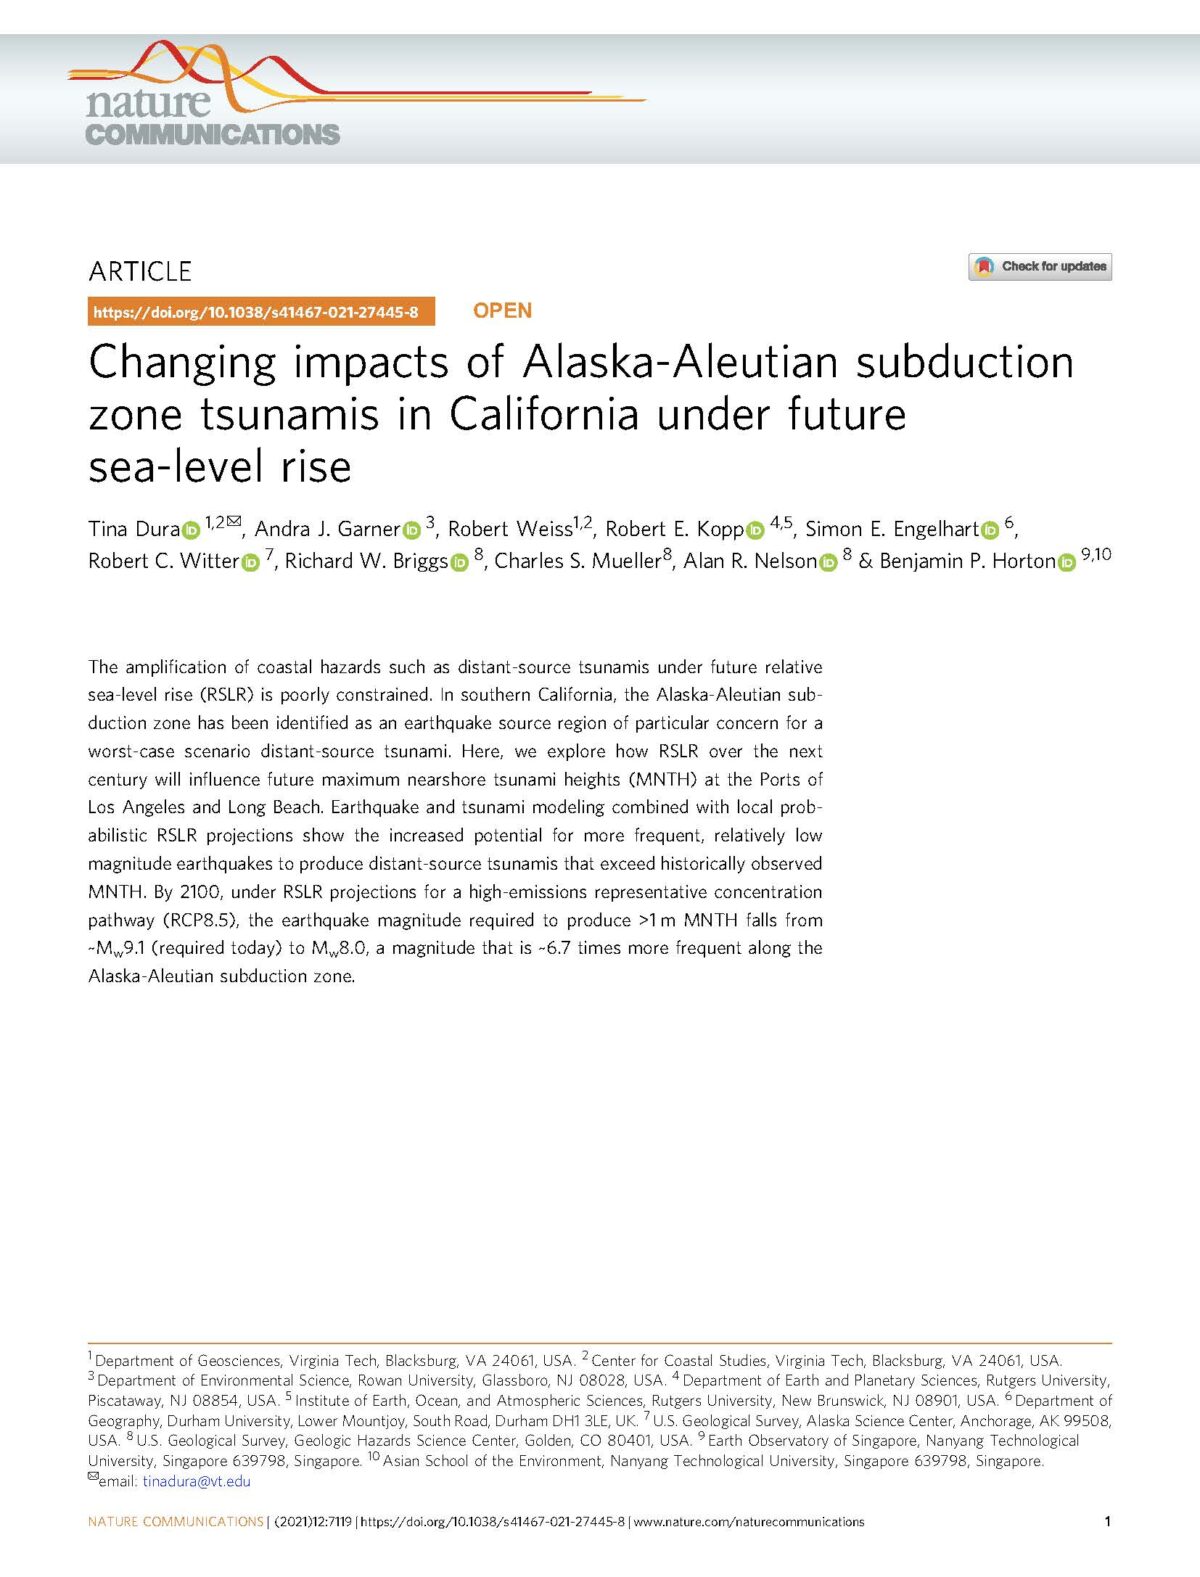 Changing impacts of Alaska-Aleutian subduction zone tsunamis in California under future sea-level rise